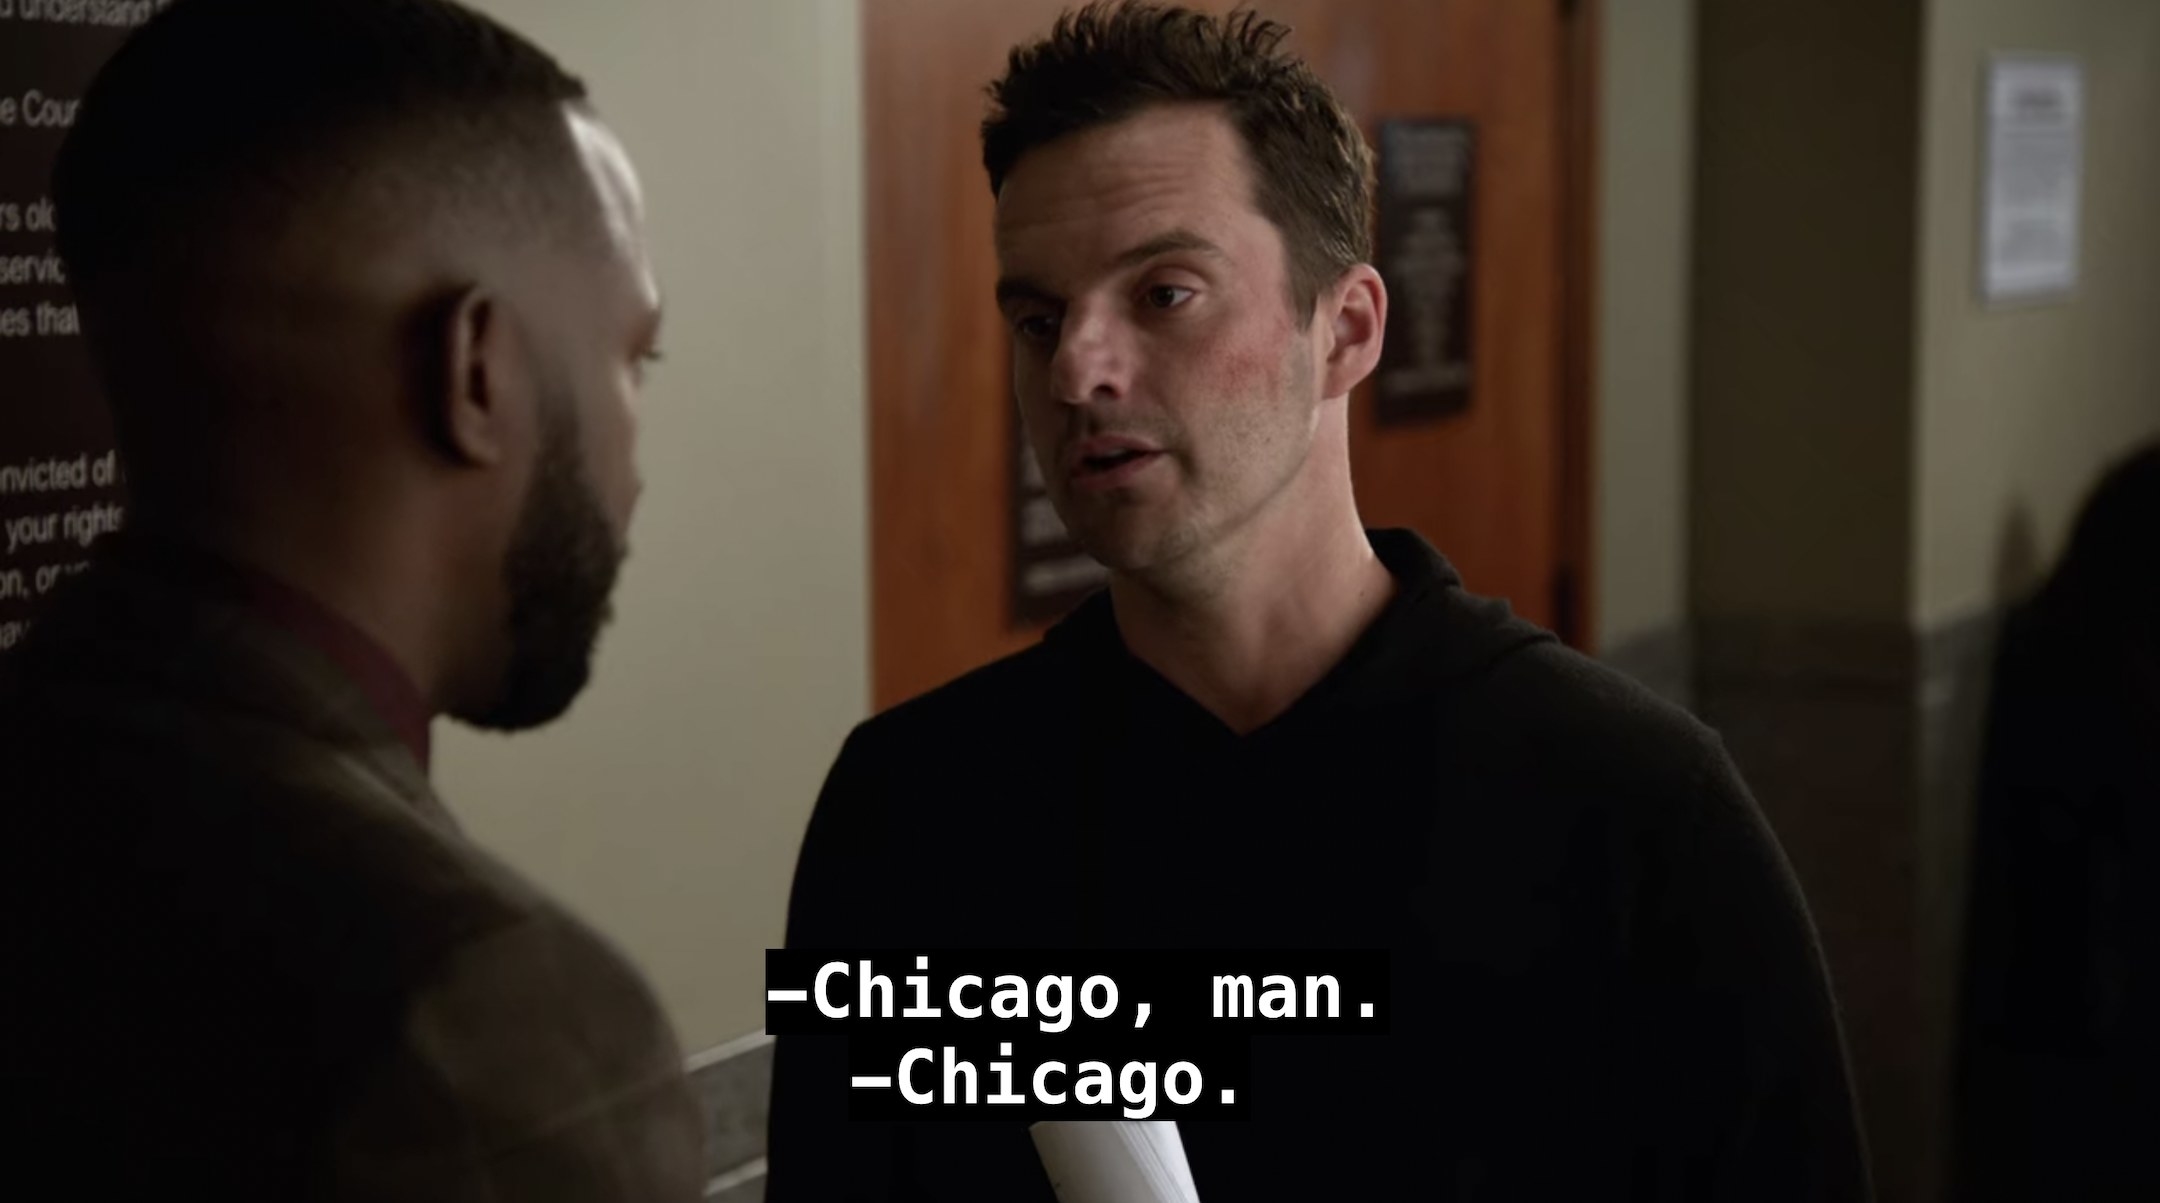 Nick says, Chicago, man, Winston says, Chicago